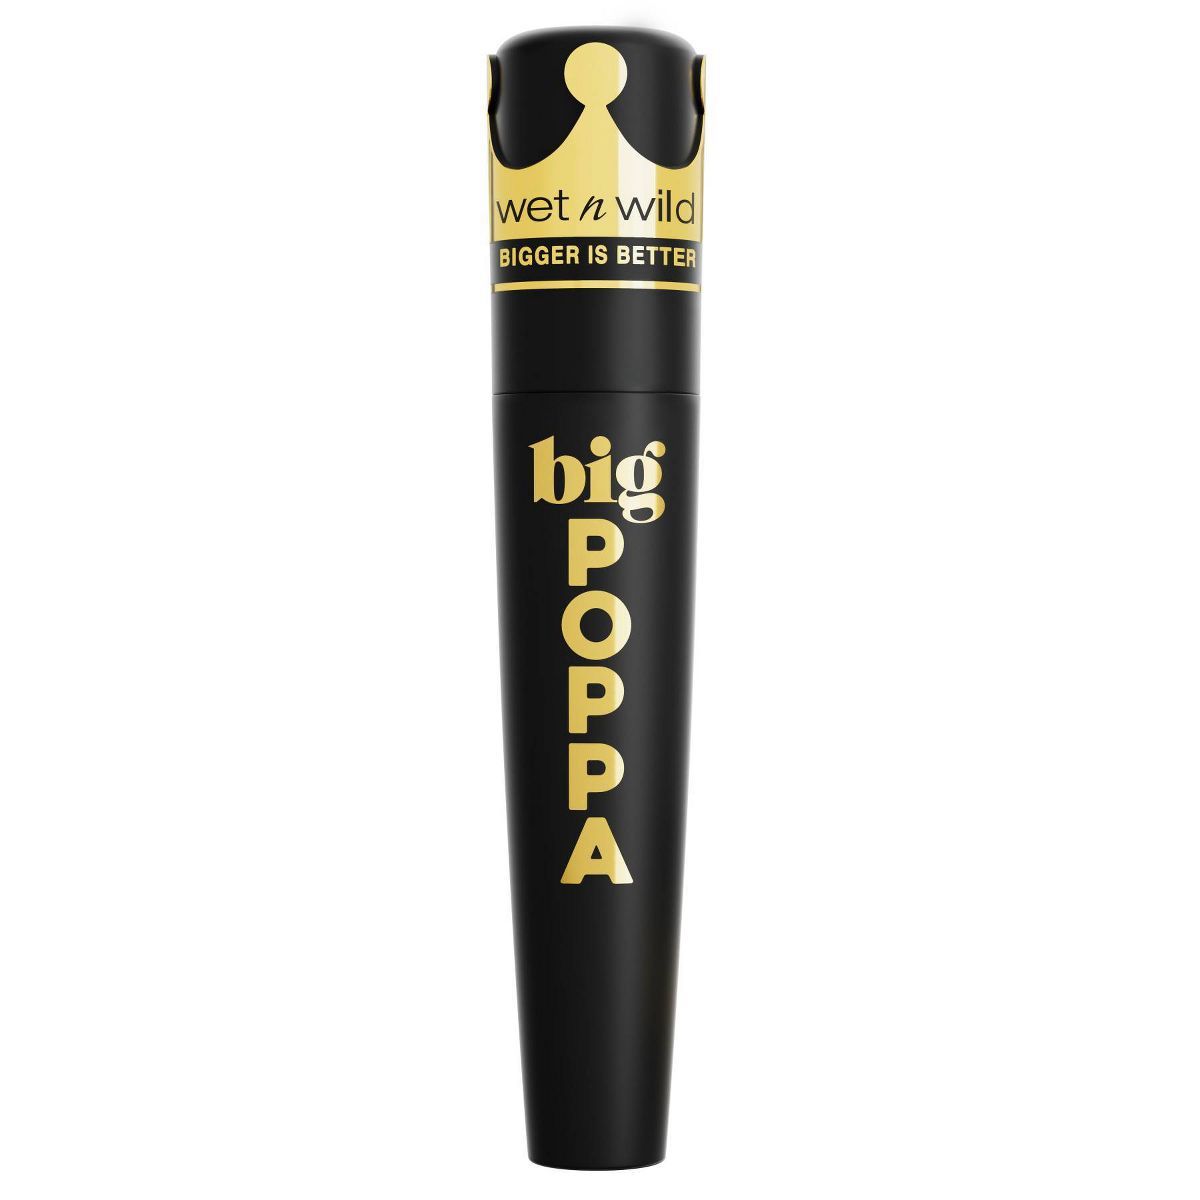 Wet n Wild Big Poppa Mascara - Blackest Black - 0.33 fl oz | Target